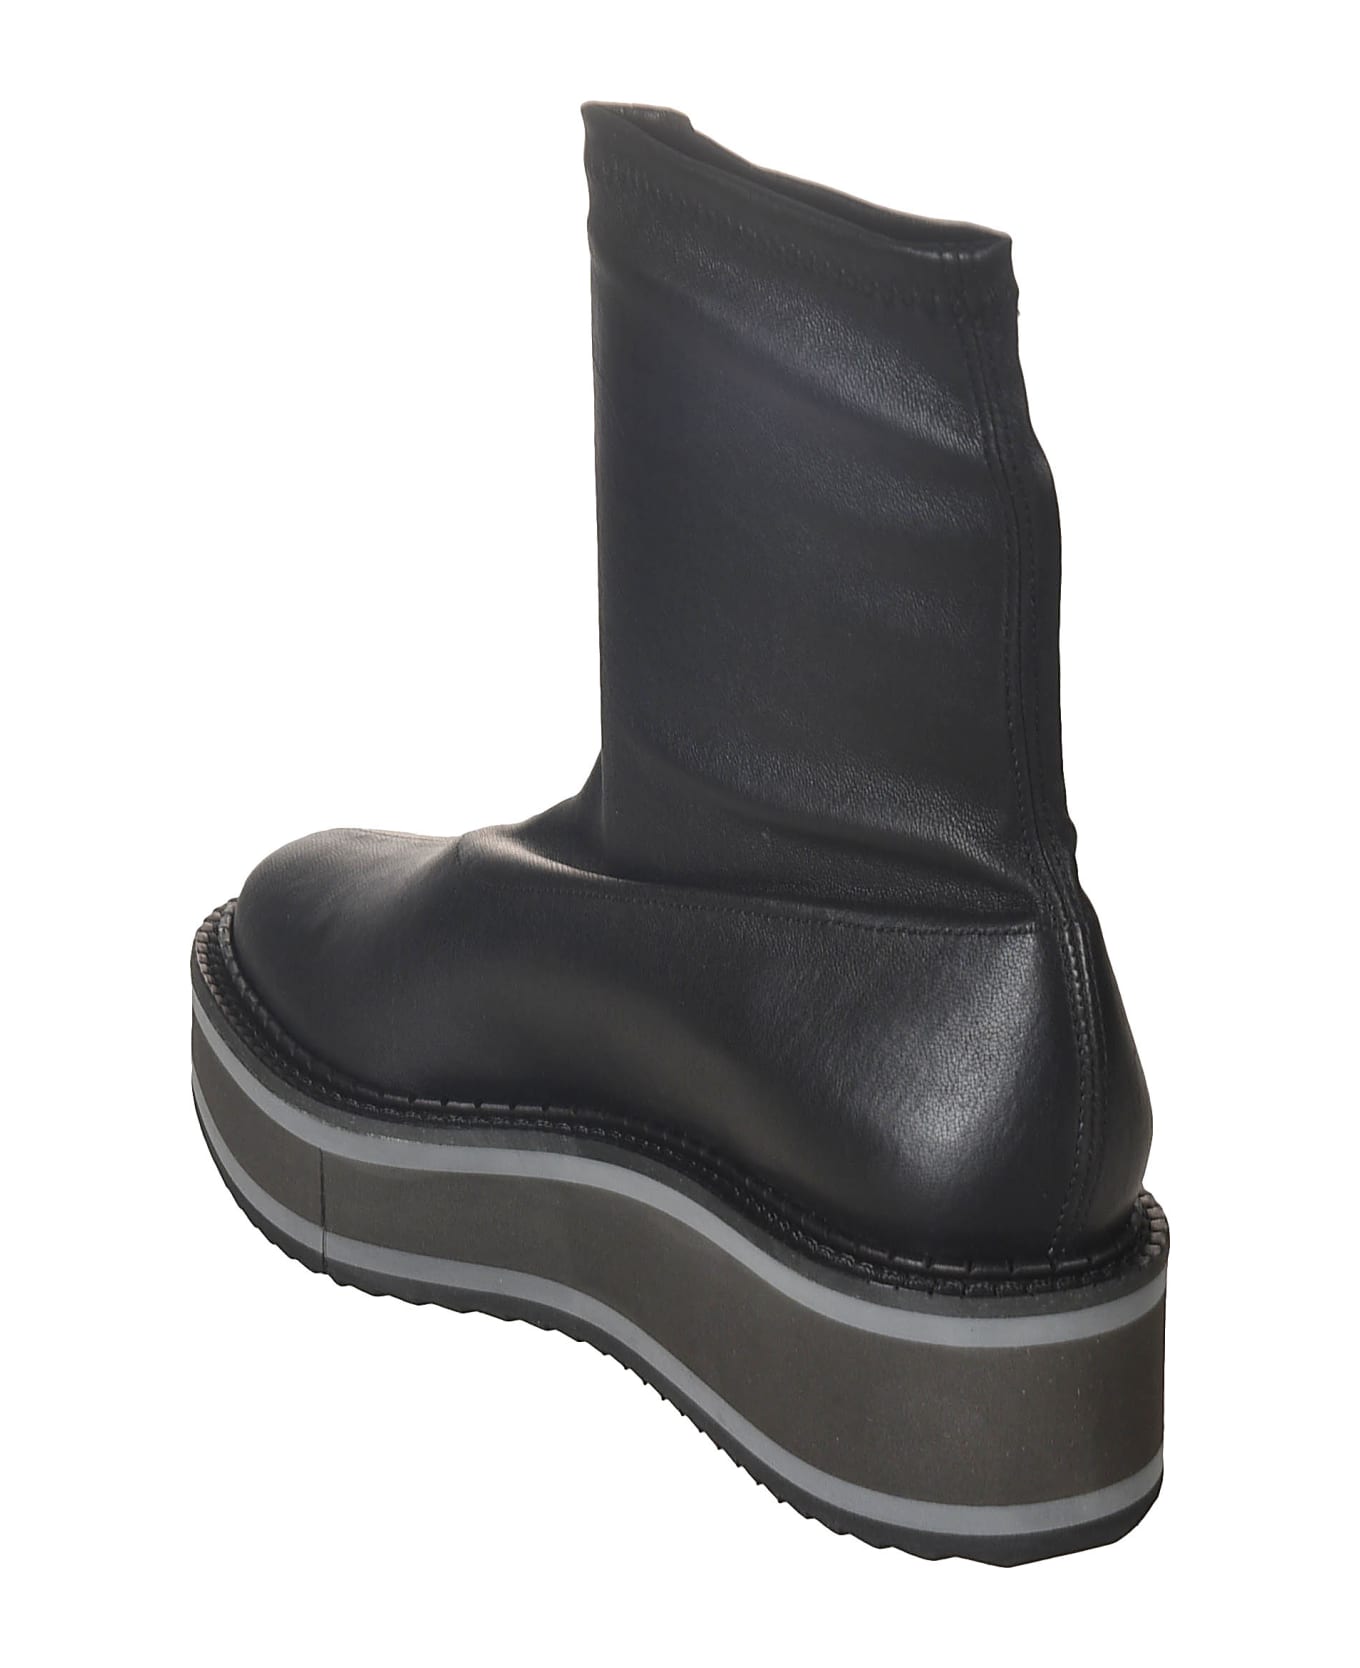 Clergerie Berta Wedge Boots - Black